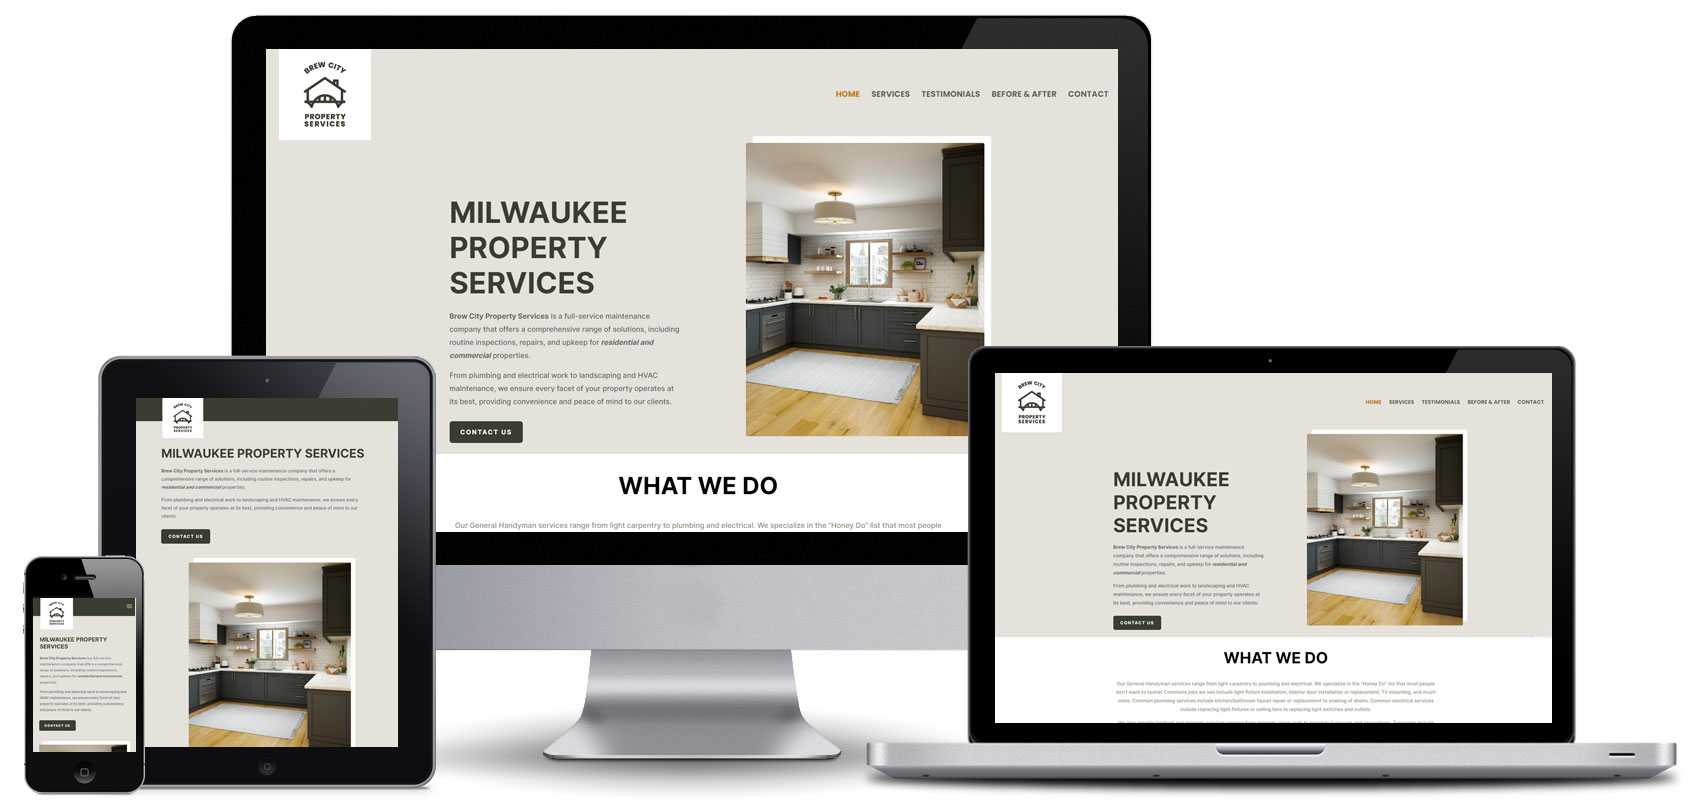 Brew City Property Services website design